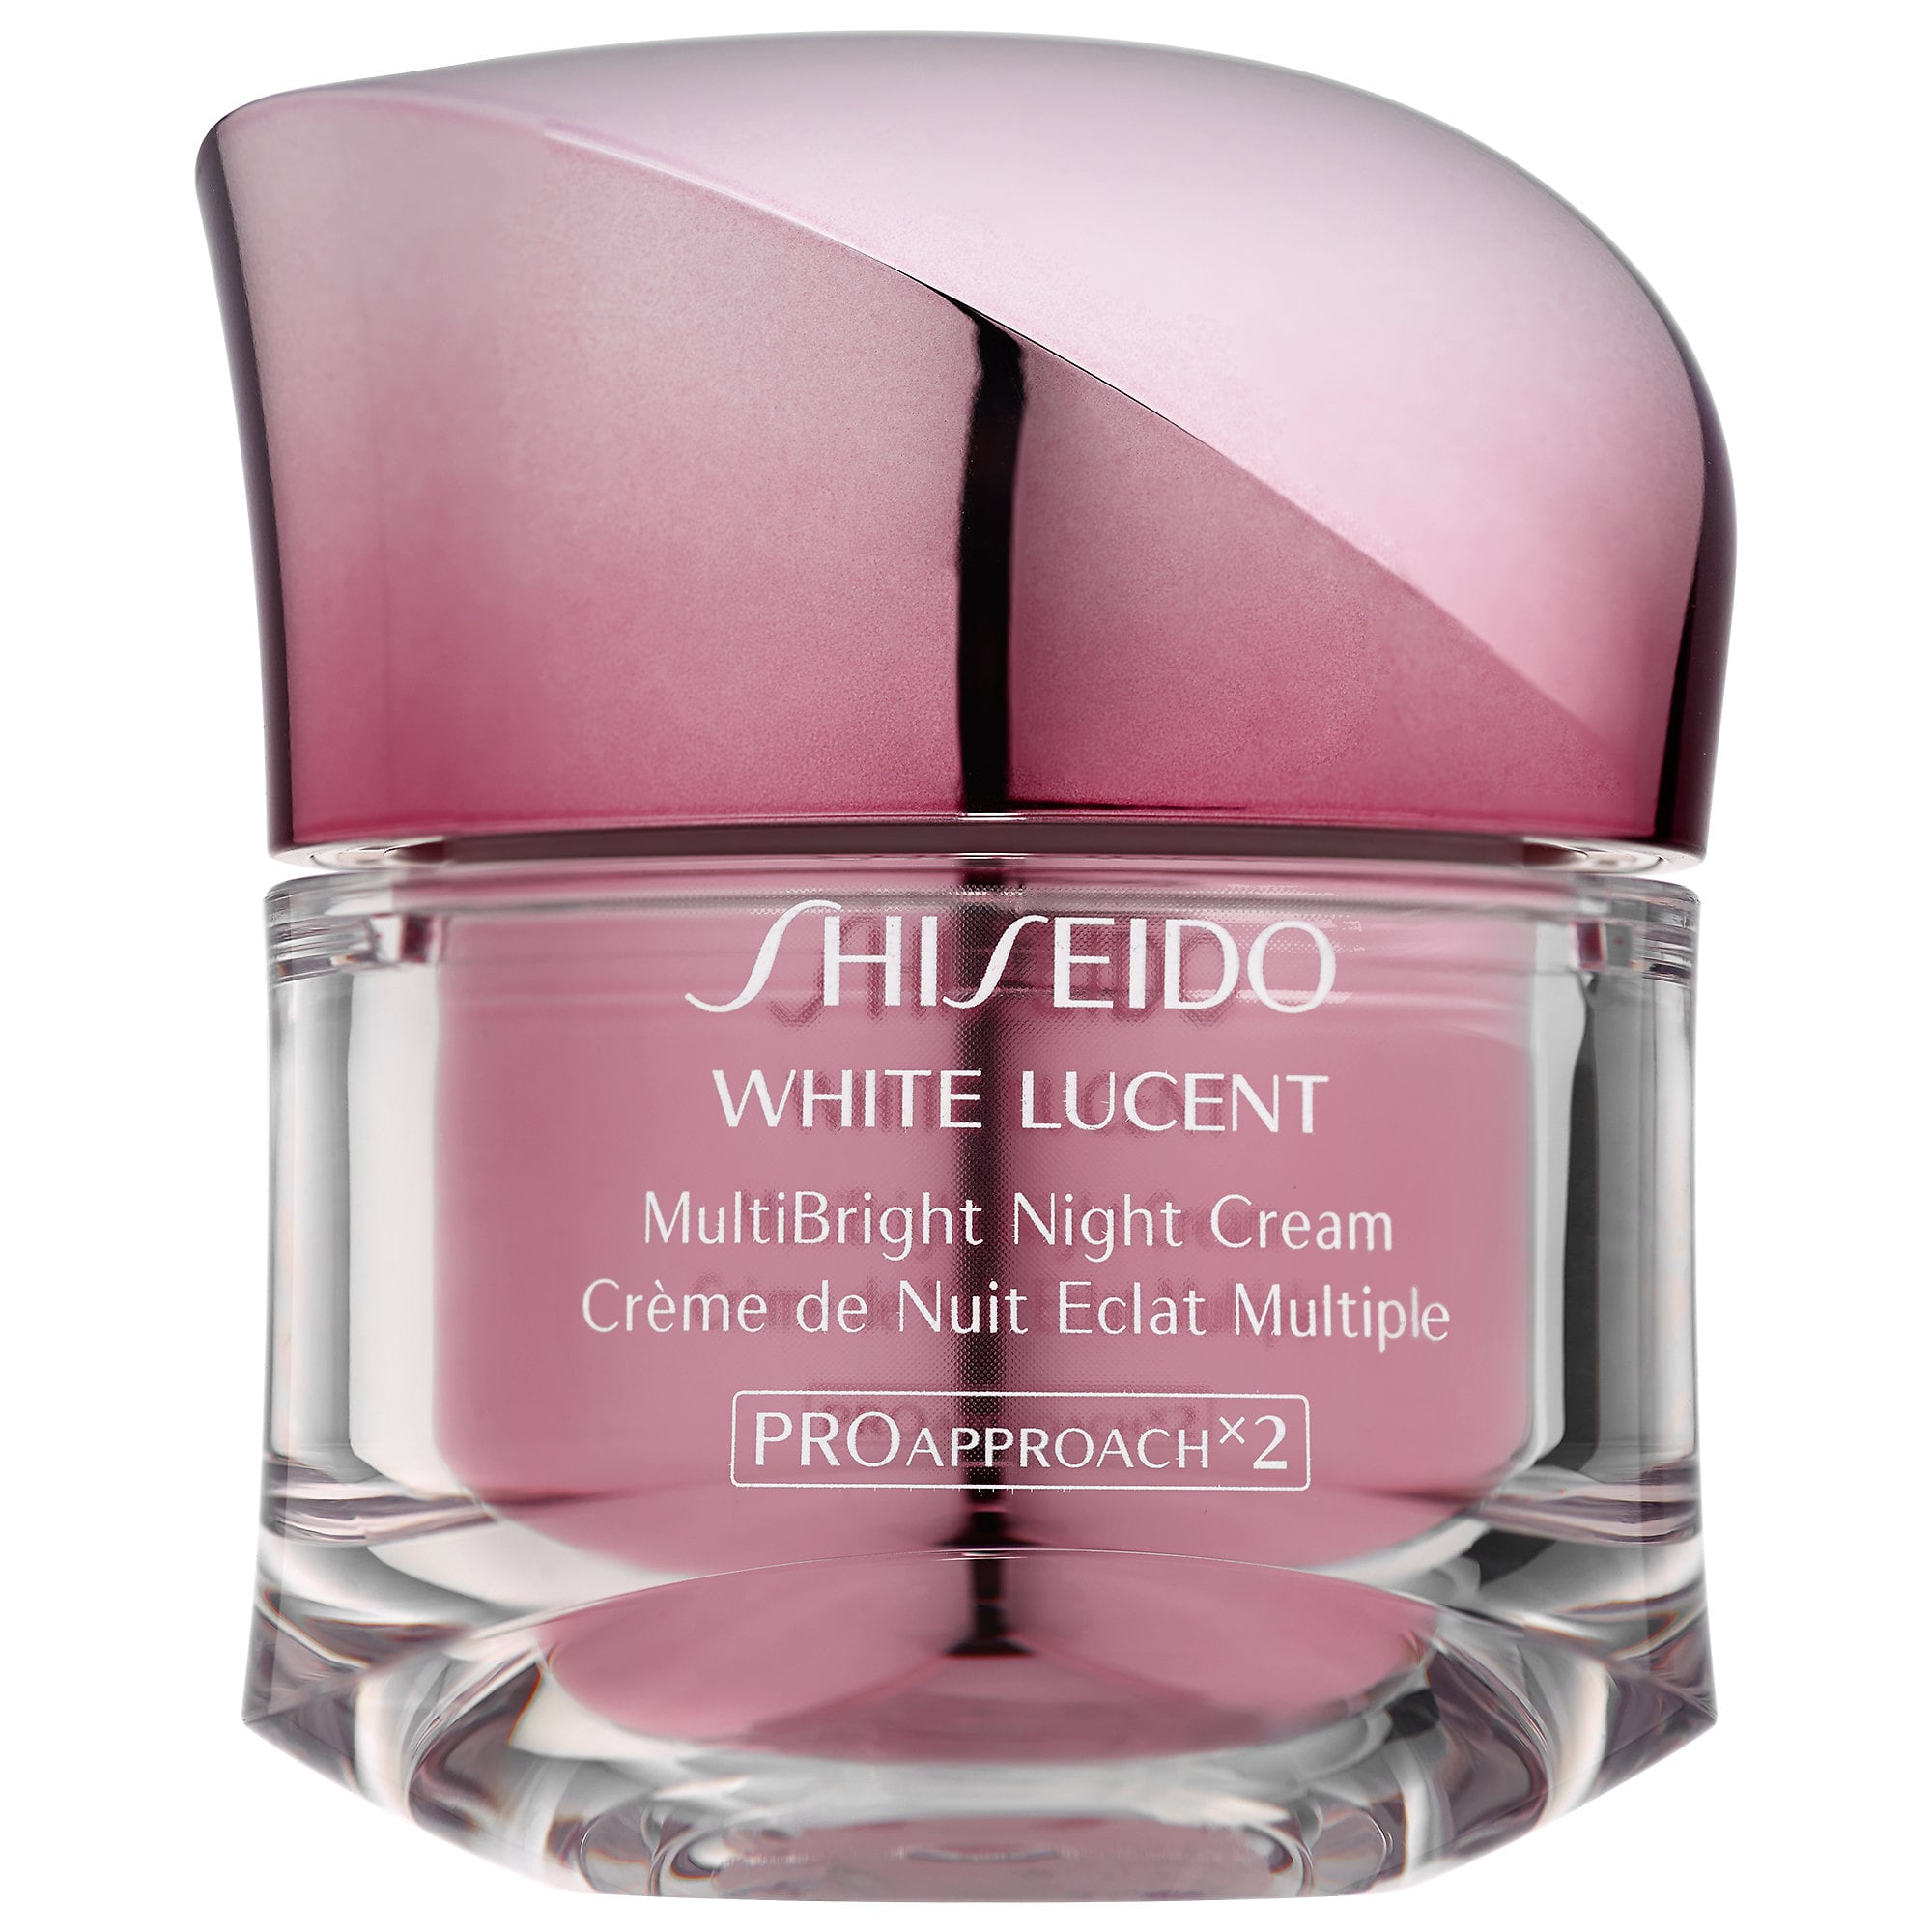 Shiseido White Lucent MultiBright Night Cream